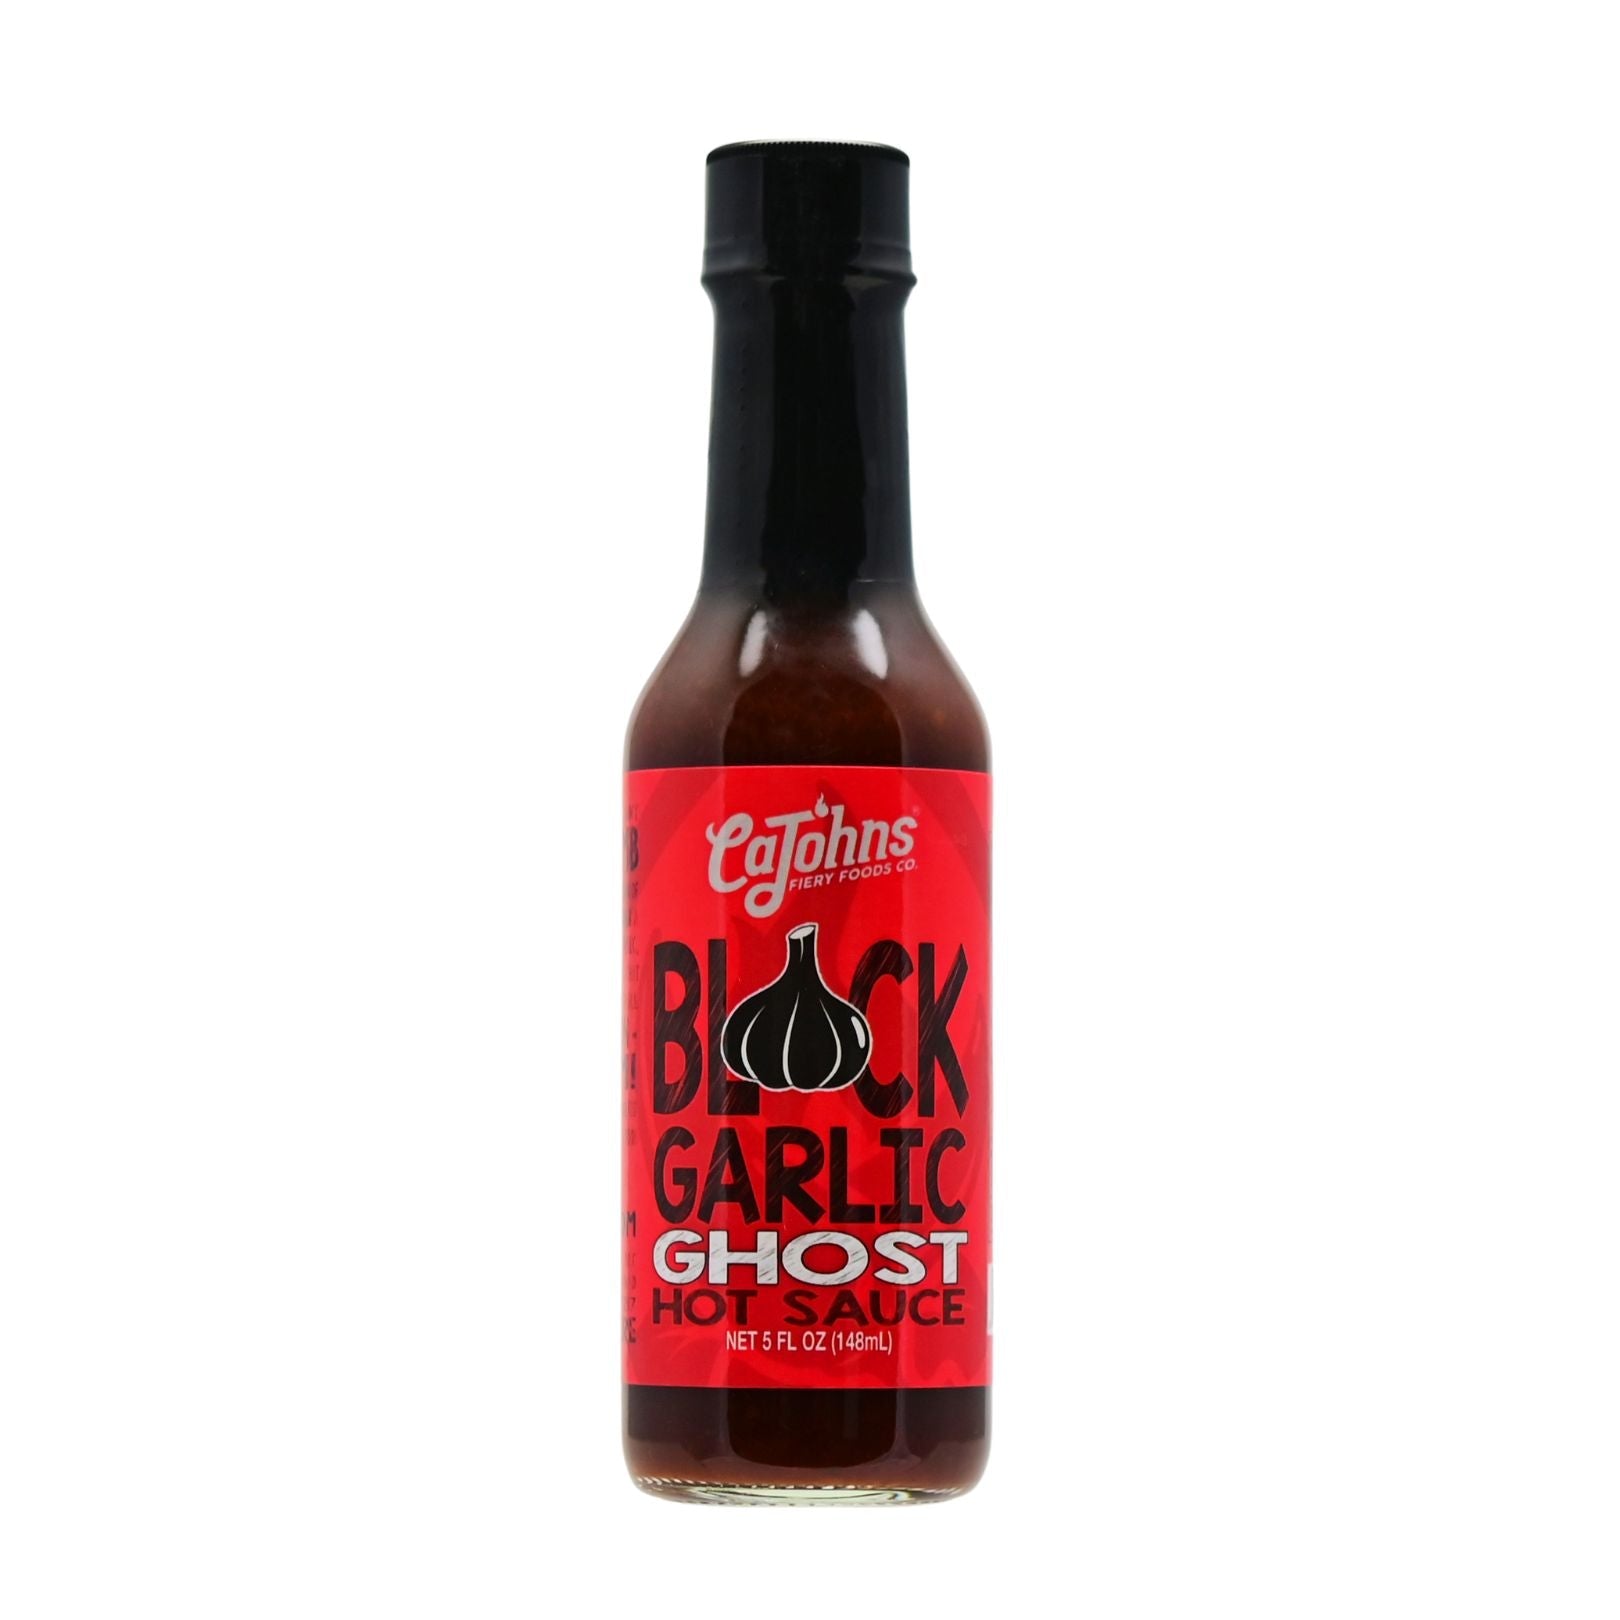 Cajohns Black Garlic Ghost Hot Sauce